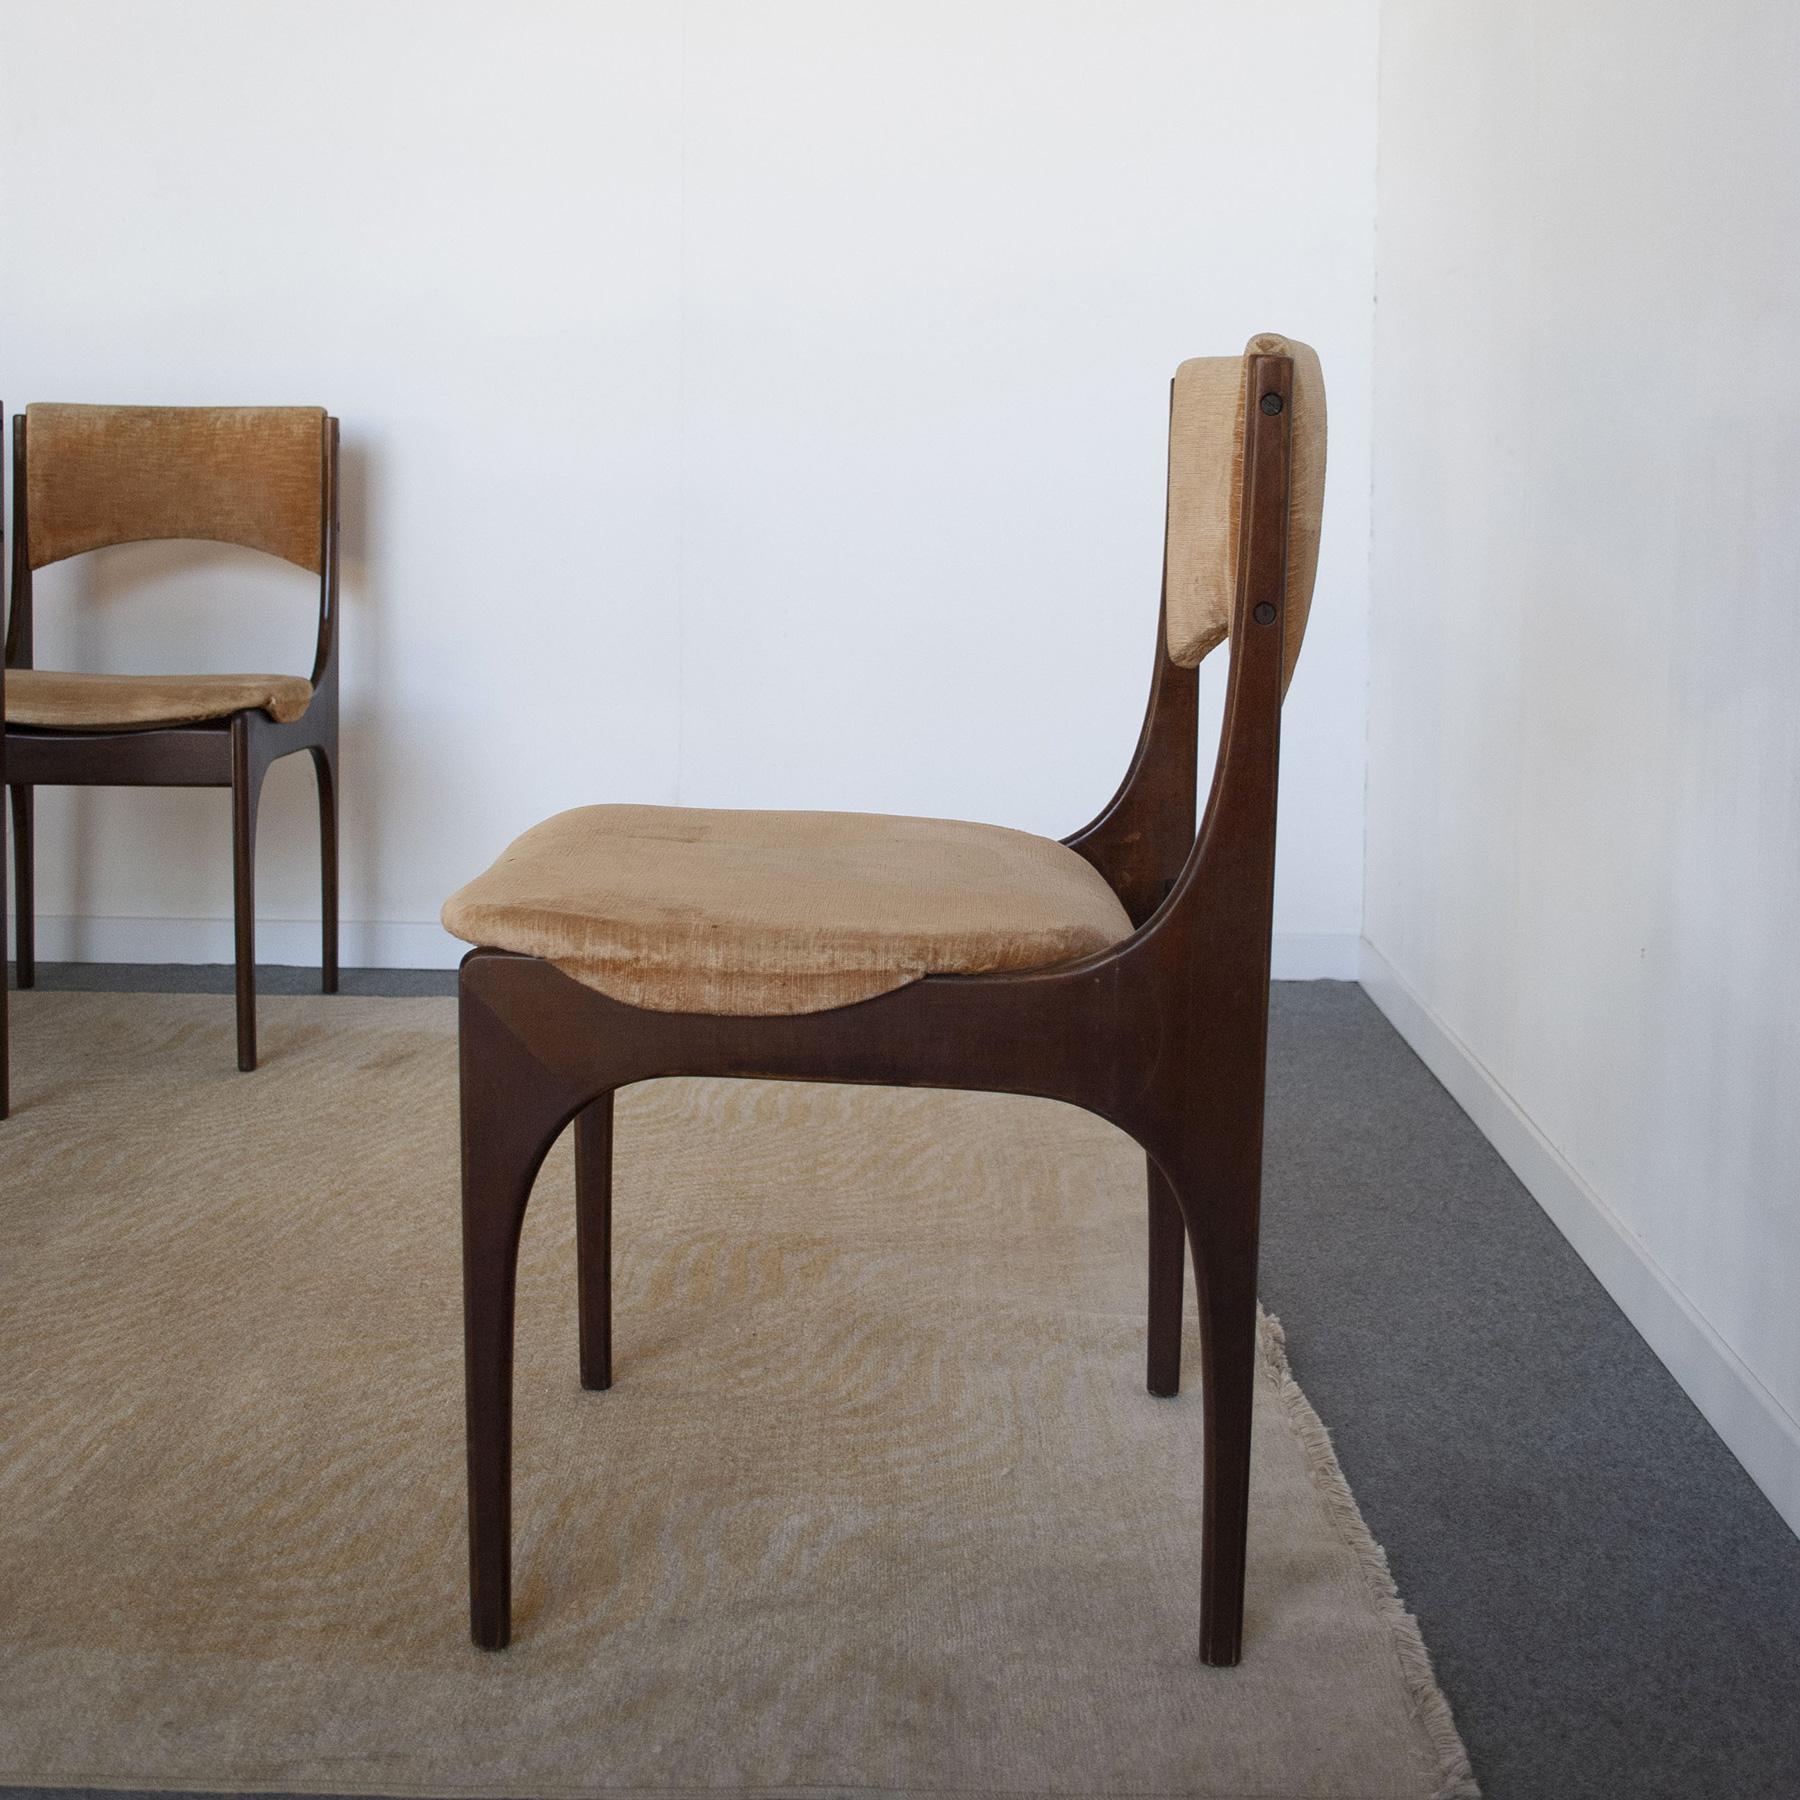 Giuseppe Gibelli Italian Midcentury Chairs from 60's 1